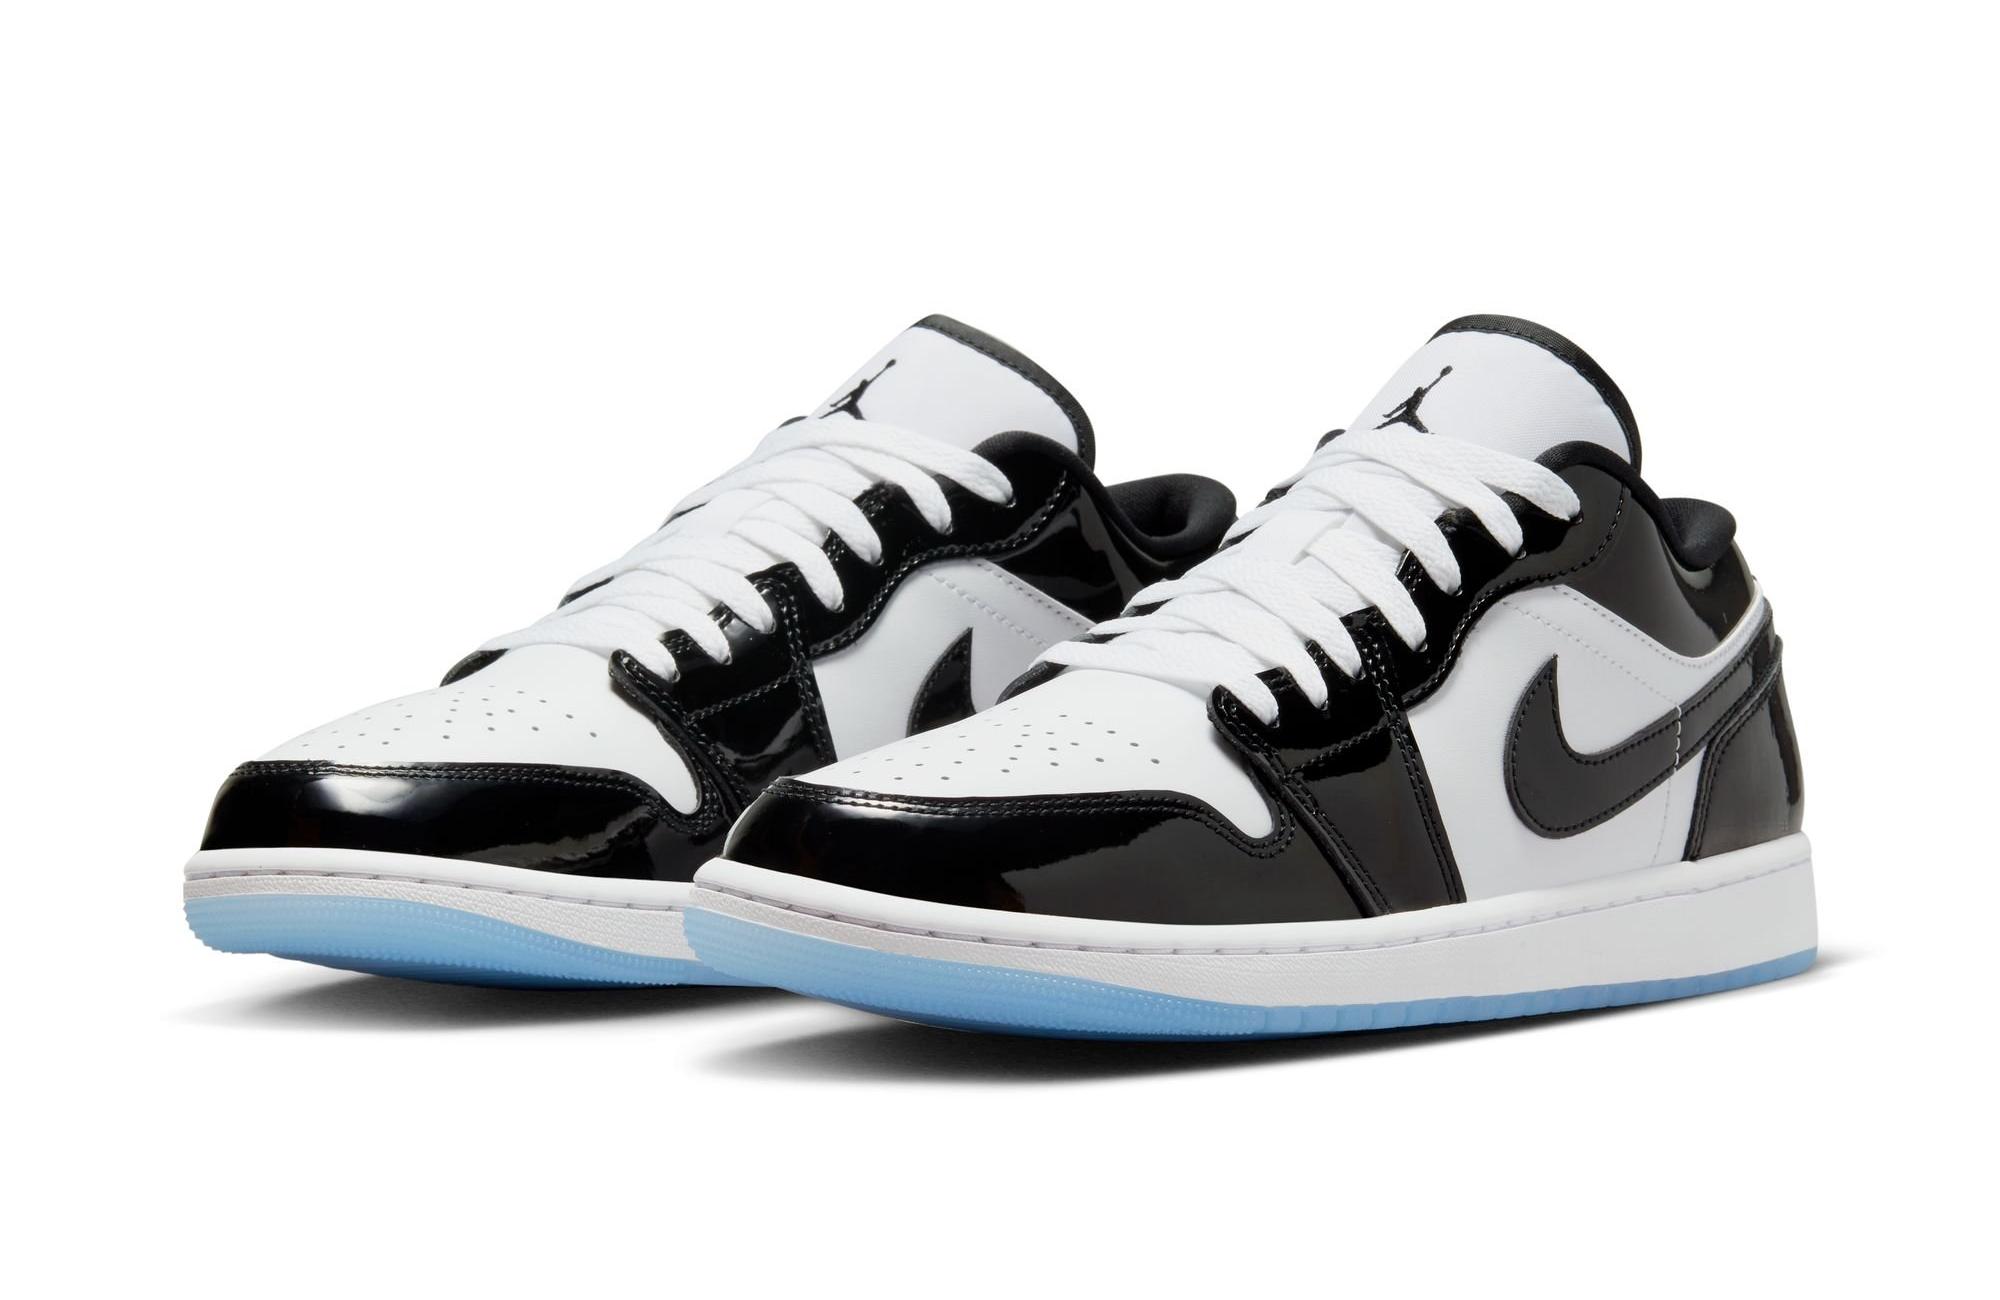 Sneakers Release – Jordan 11 Retro Low “Concord